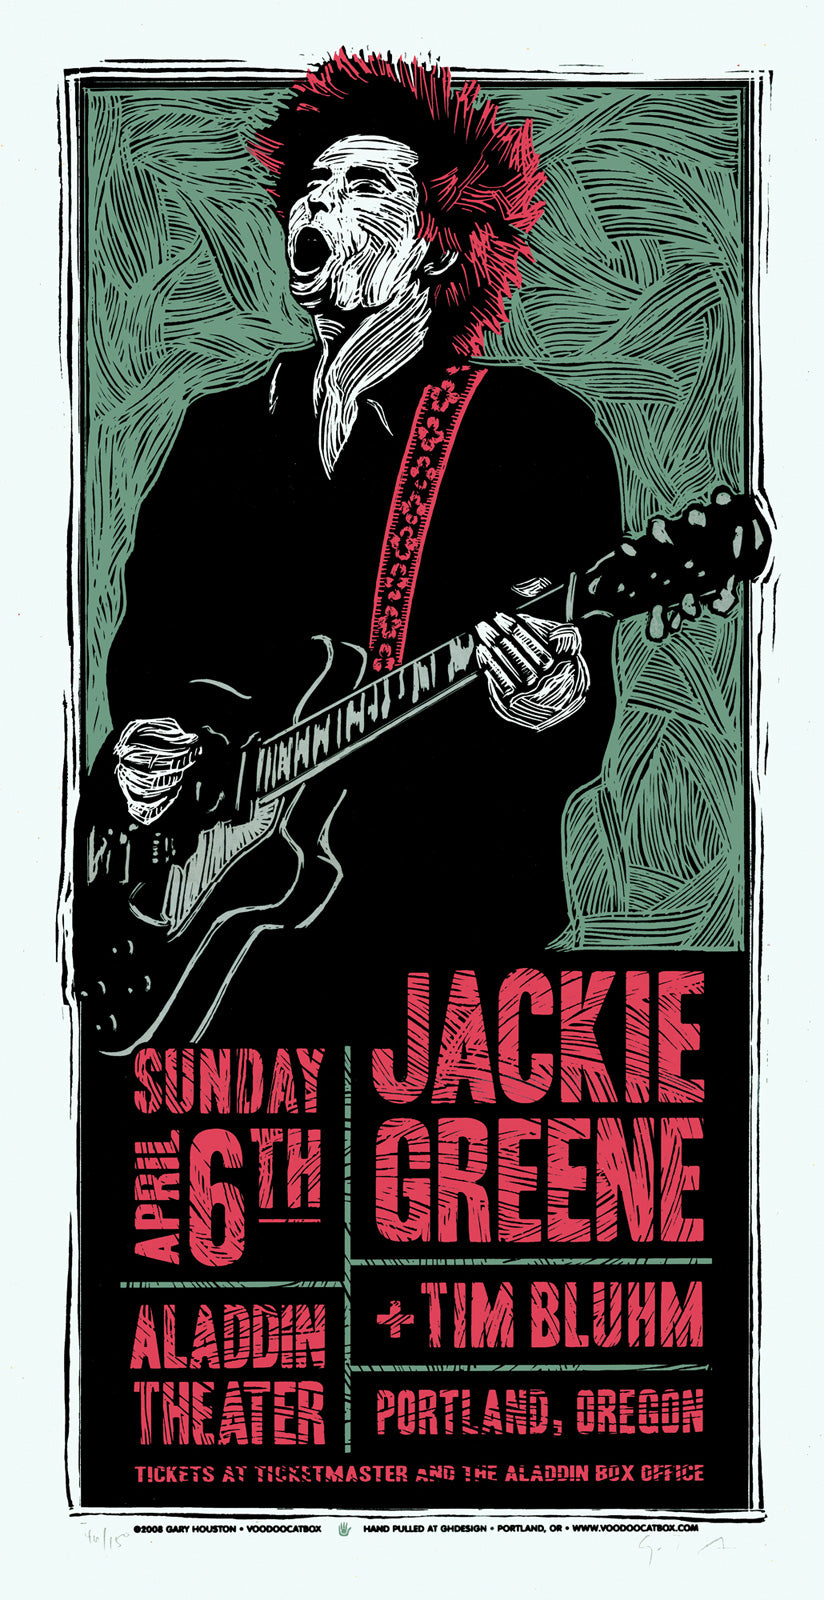 Jackie Greene #1